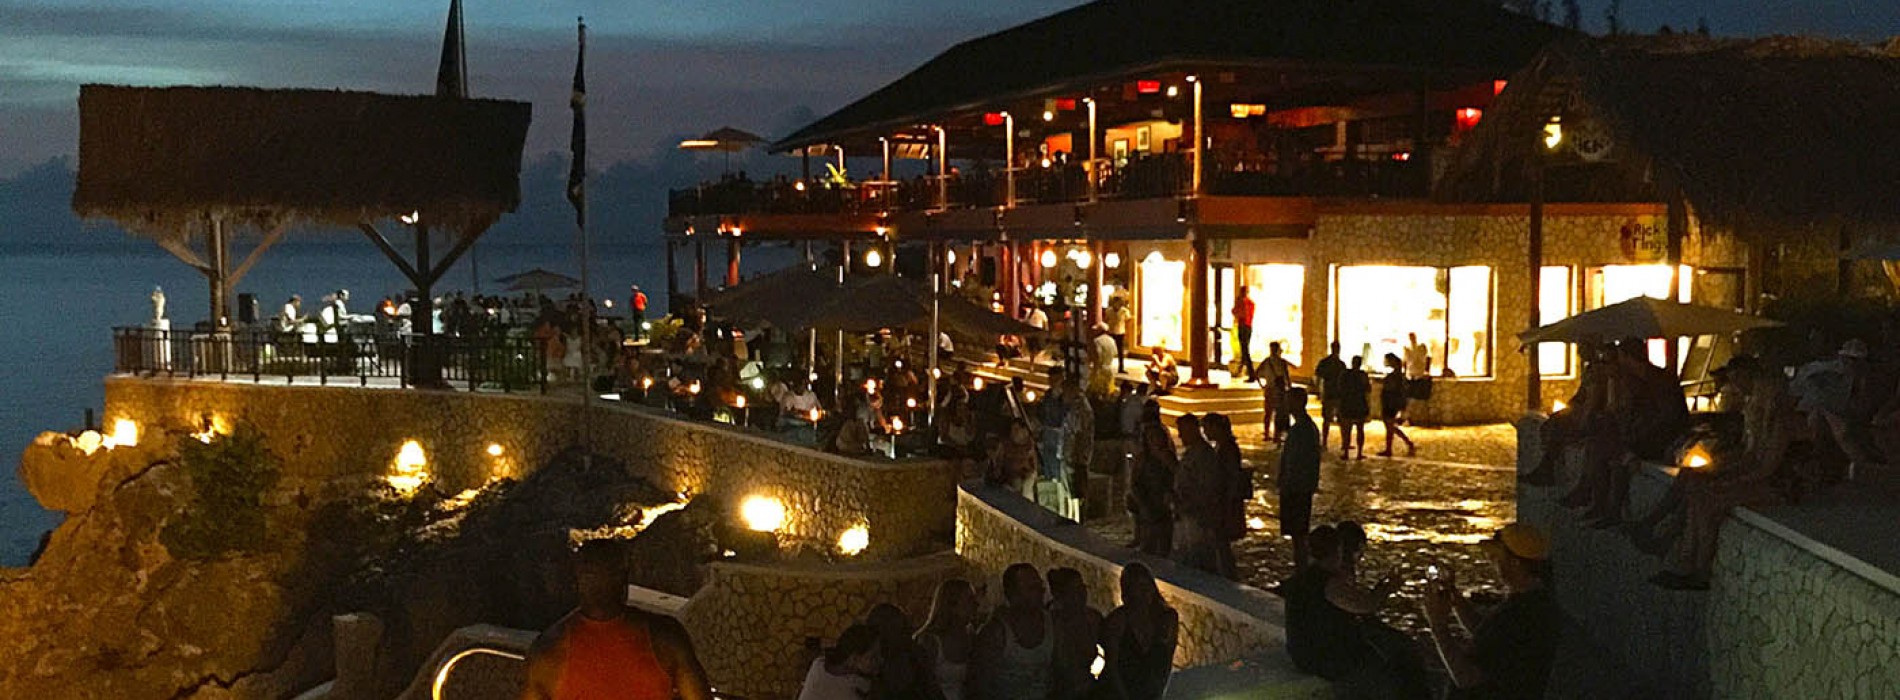 Enjoy Jamaica’s Nightlife – haven amidst Caribbean